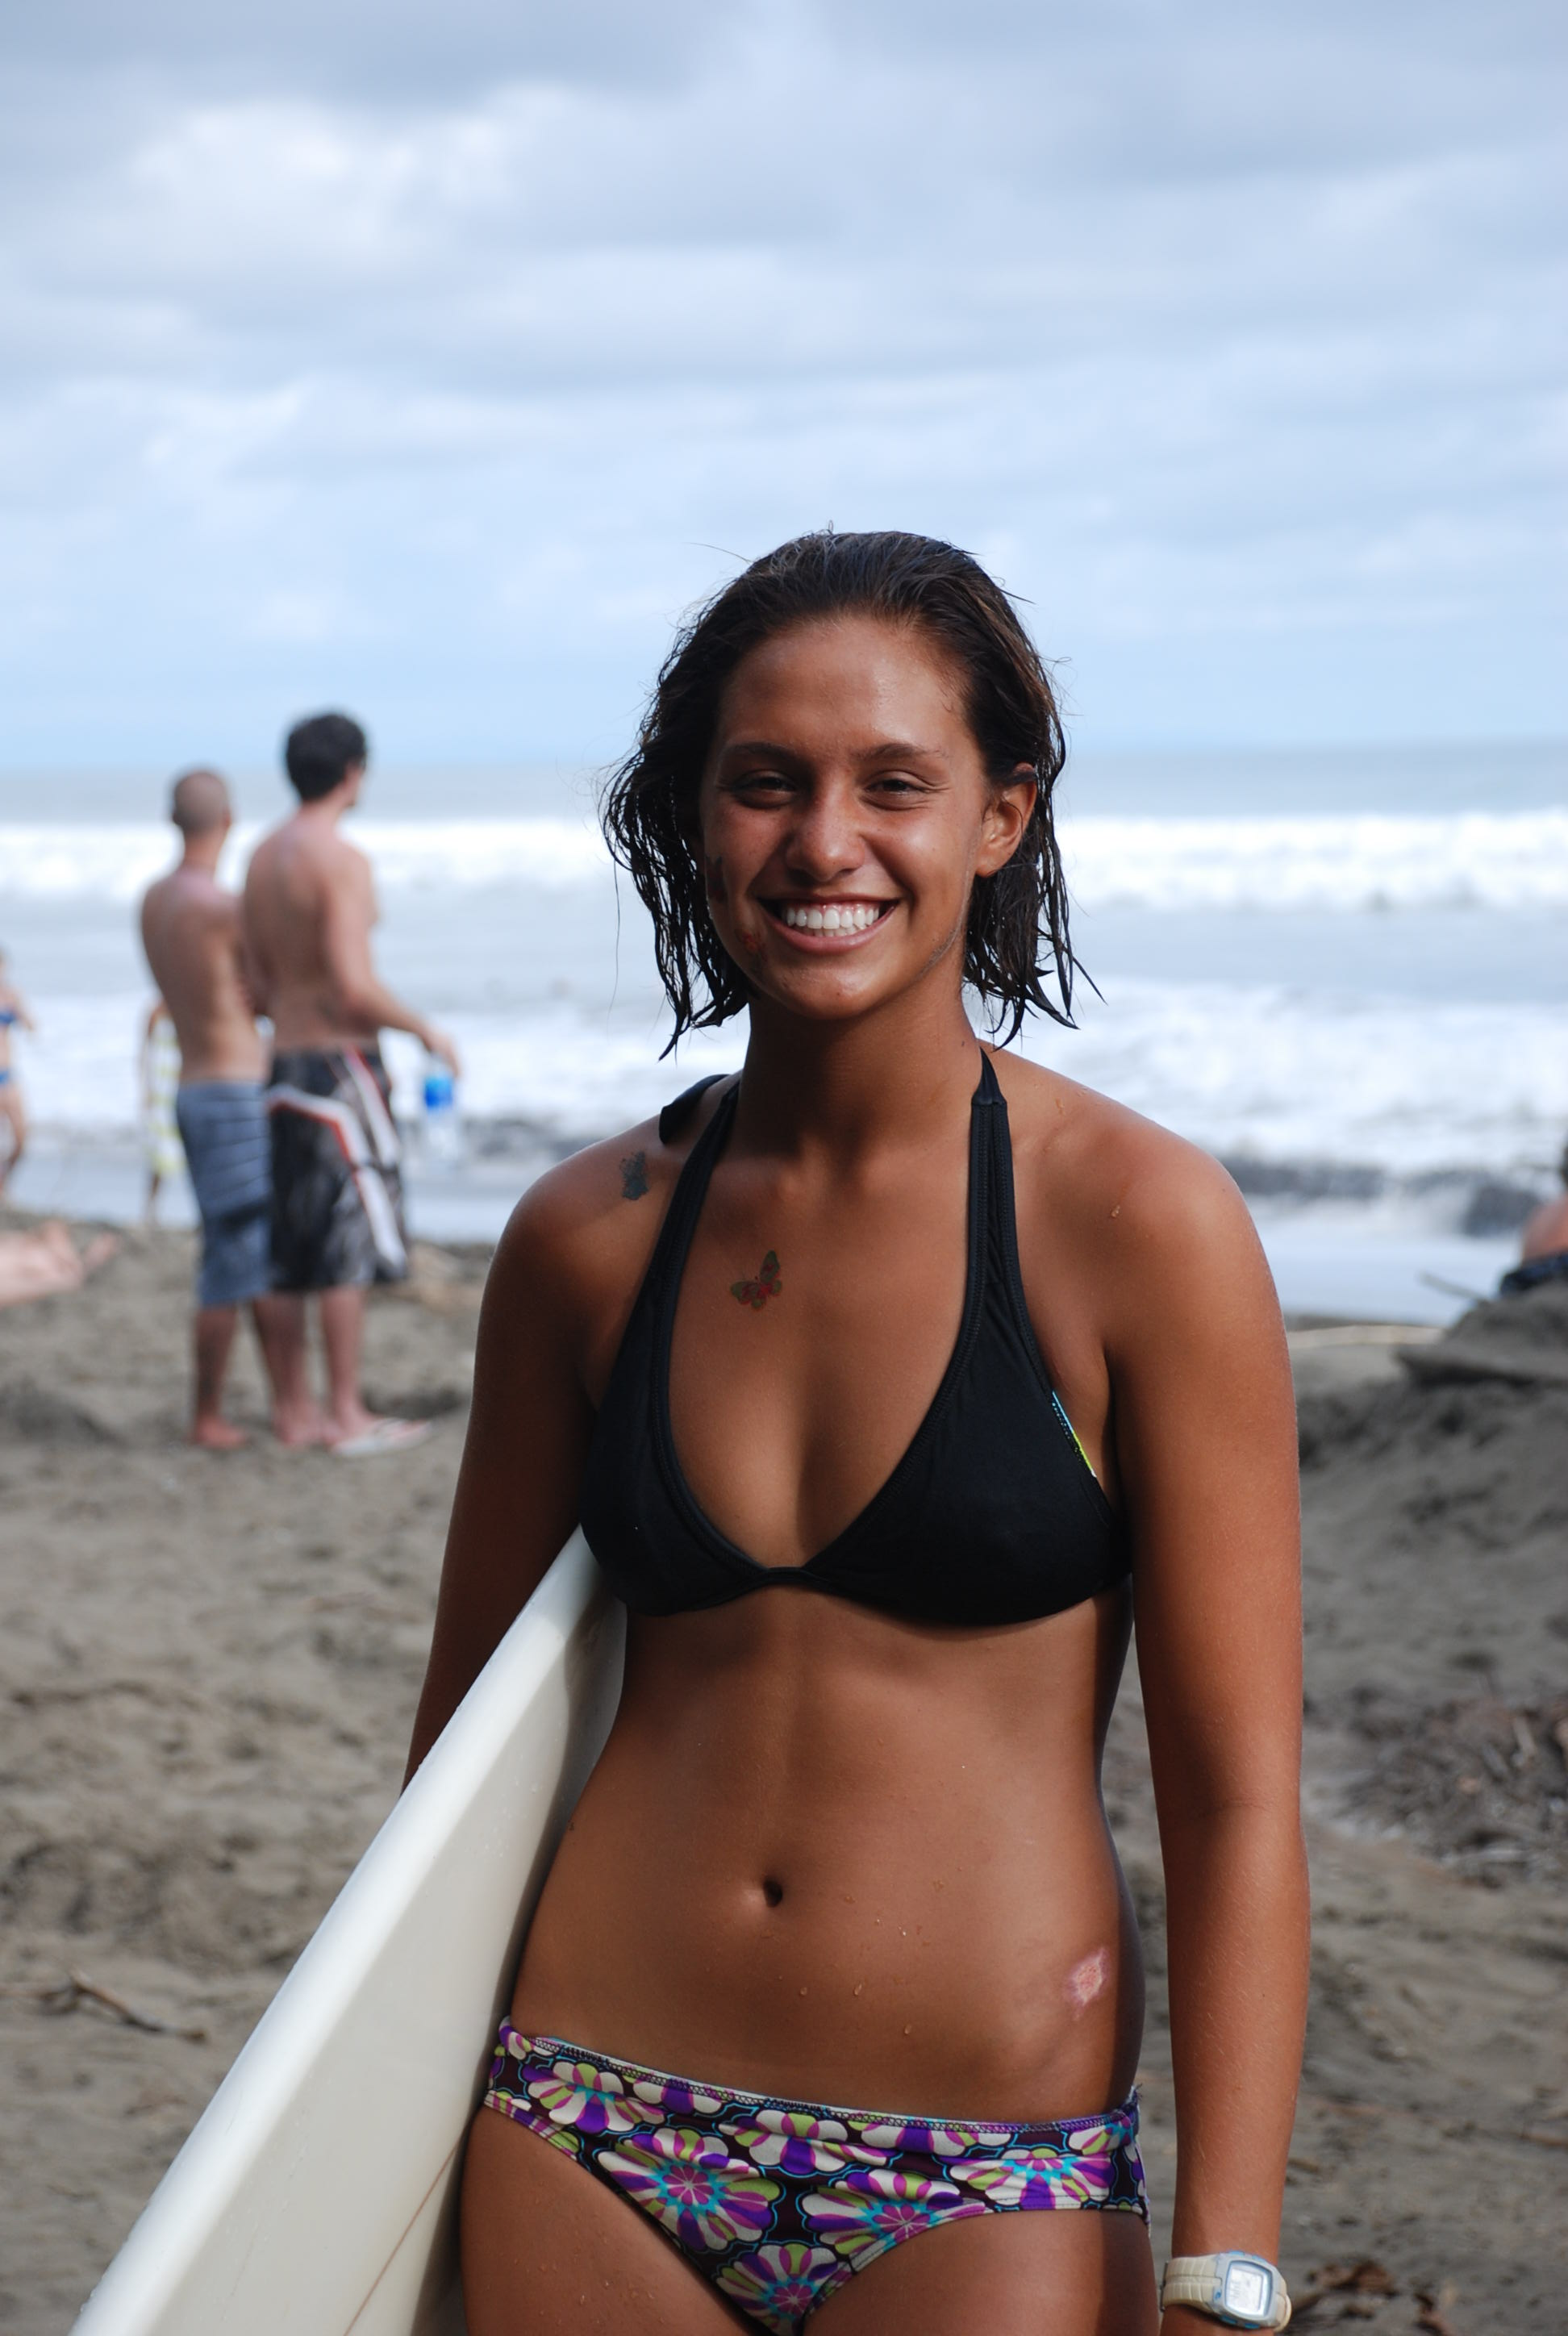 costa rica female surfer dominical